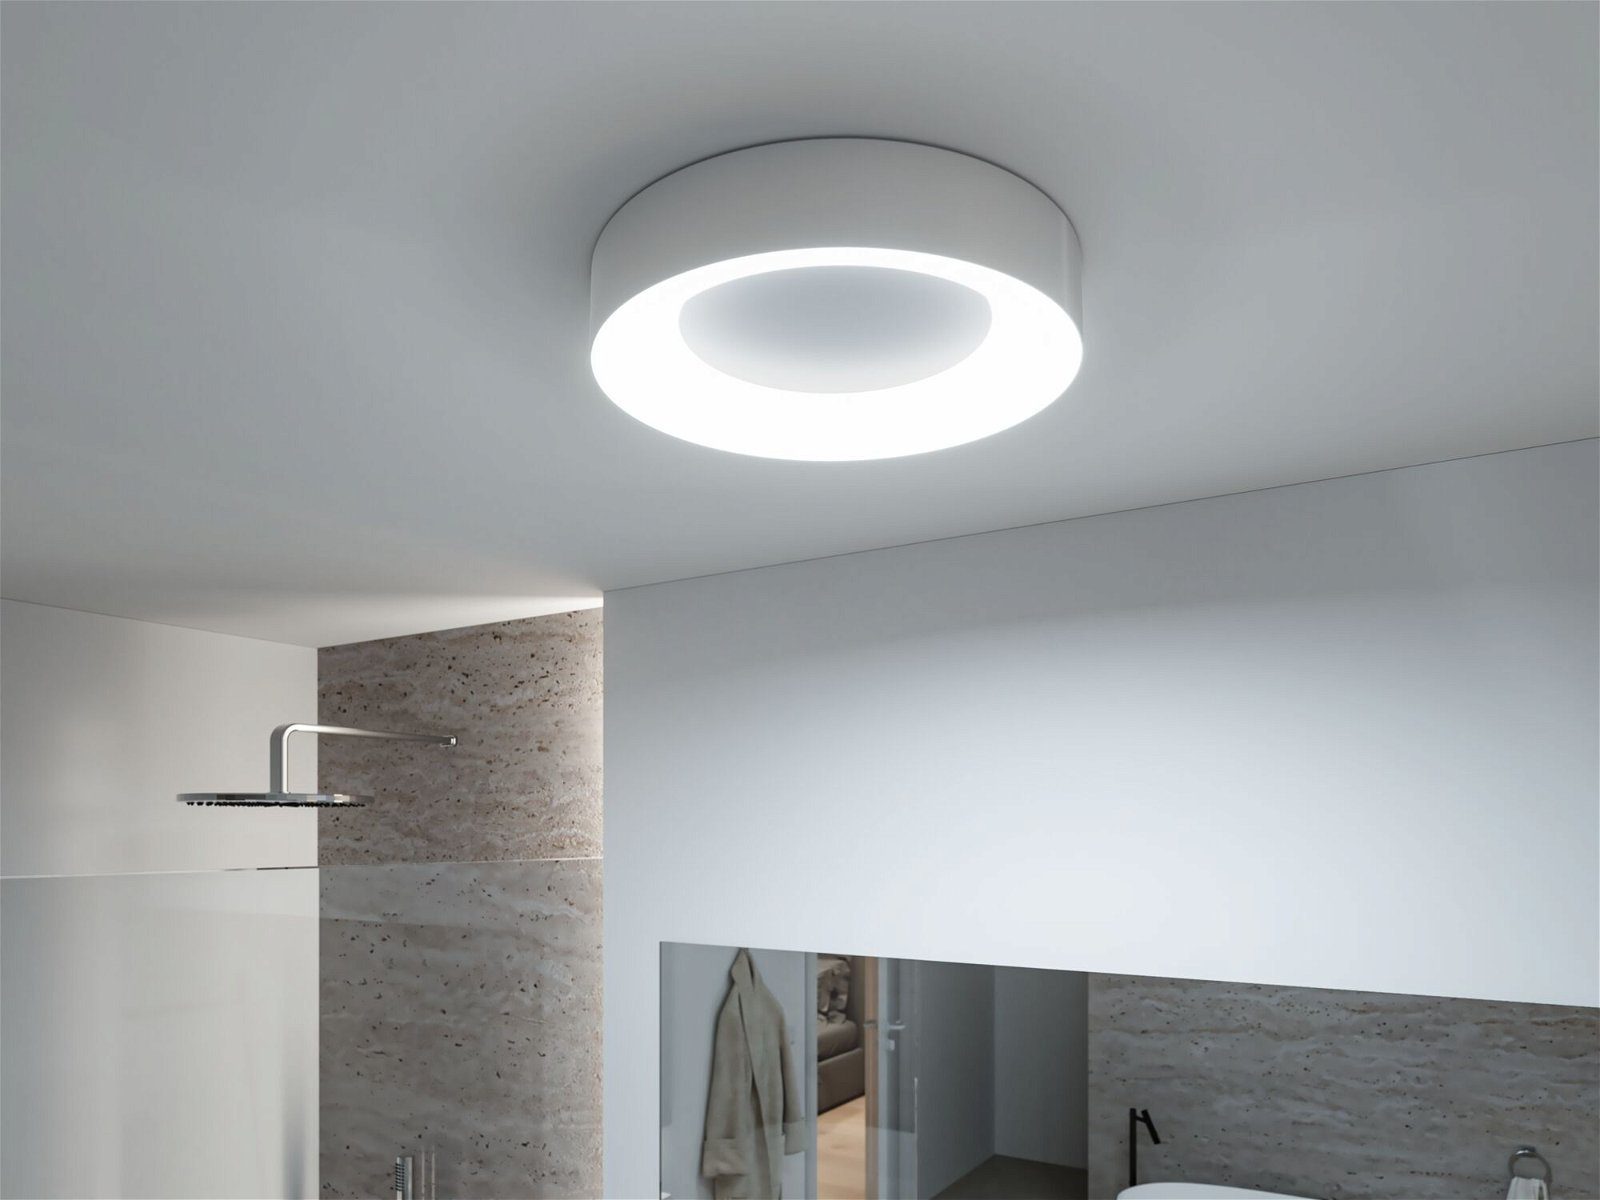 integriert, Tageslichtweiß, Metall/Kunststoff, LED Selection WhiteSwitch Alu Paulmann IP44 Deckenleuchte LED Bathroom Casca 230V 400mm 1x23W fest